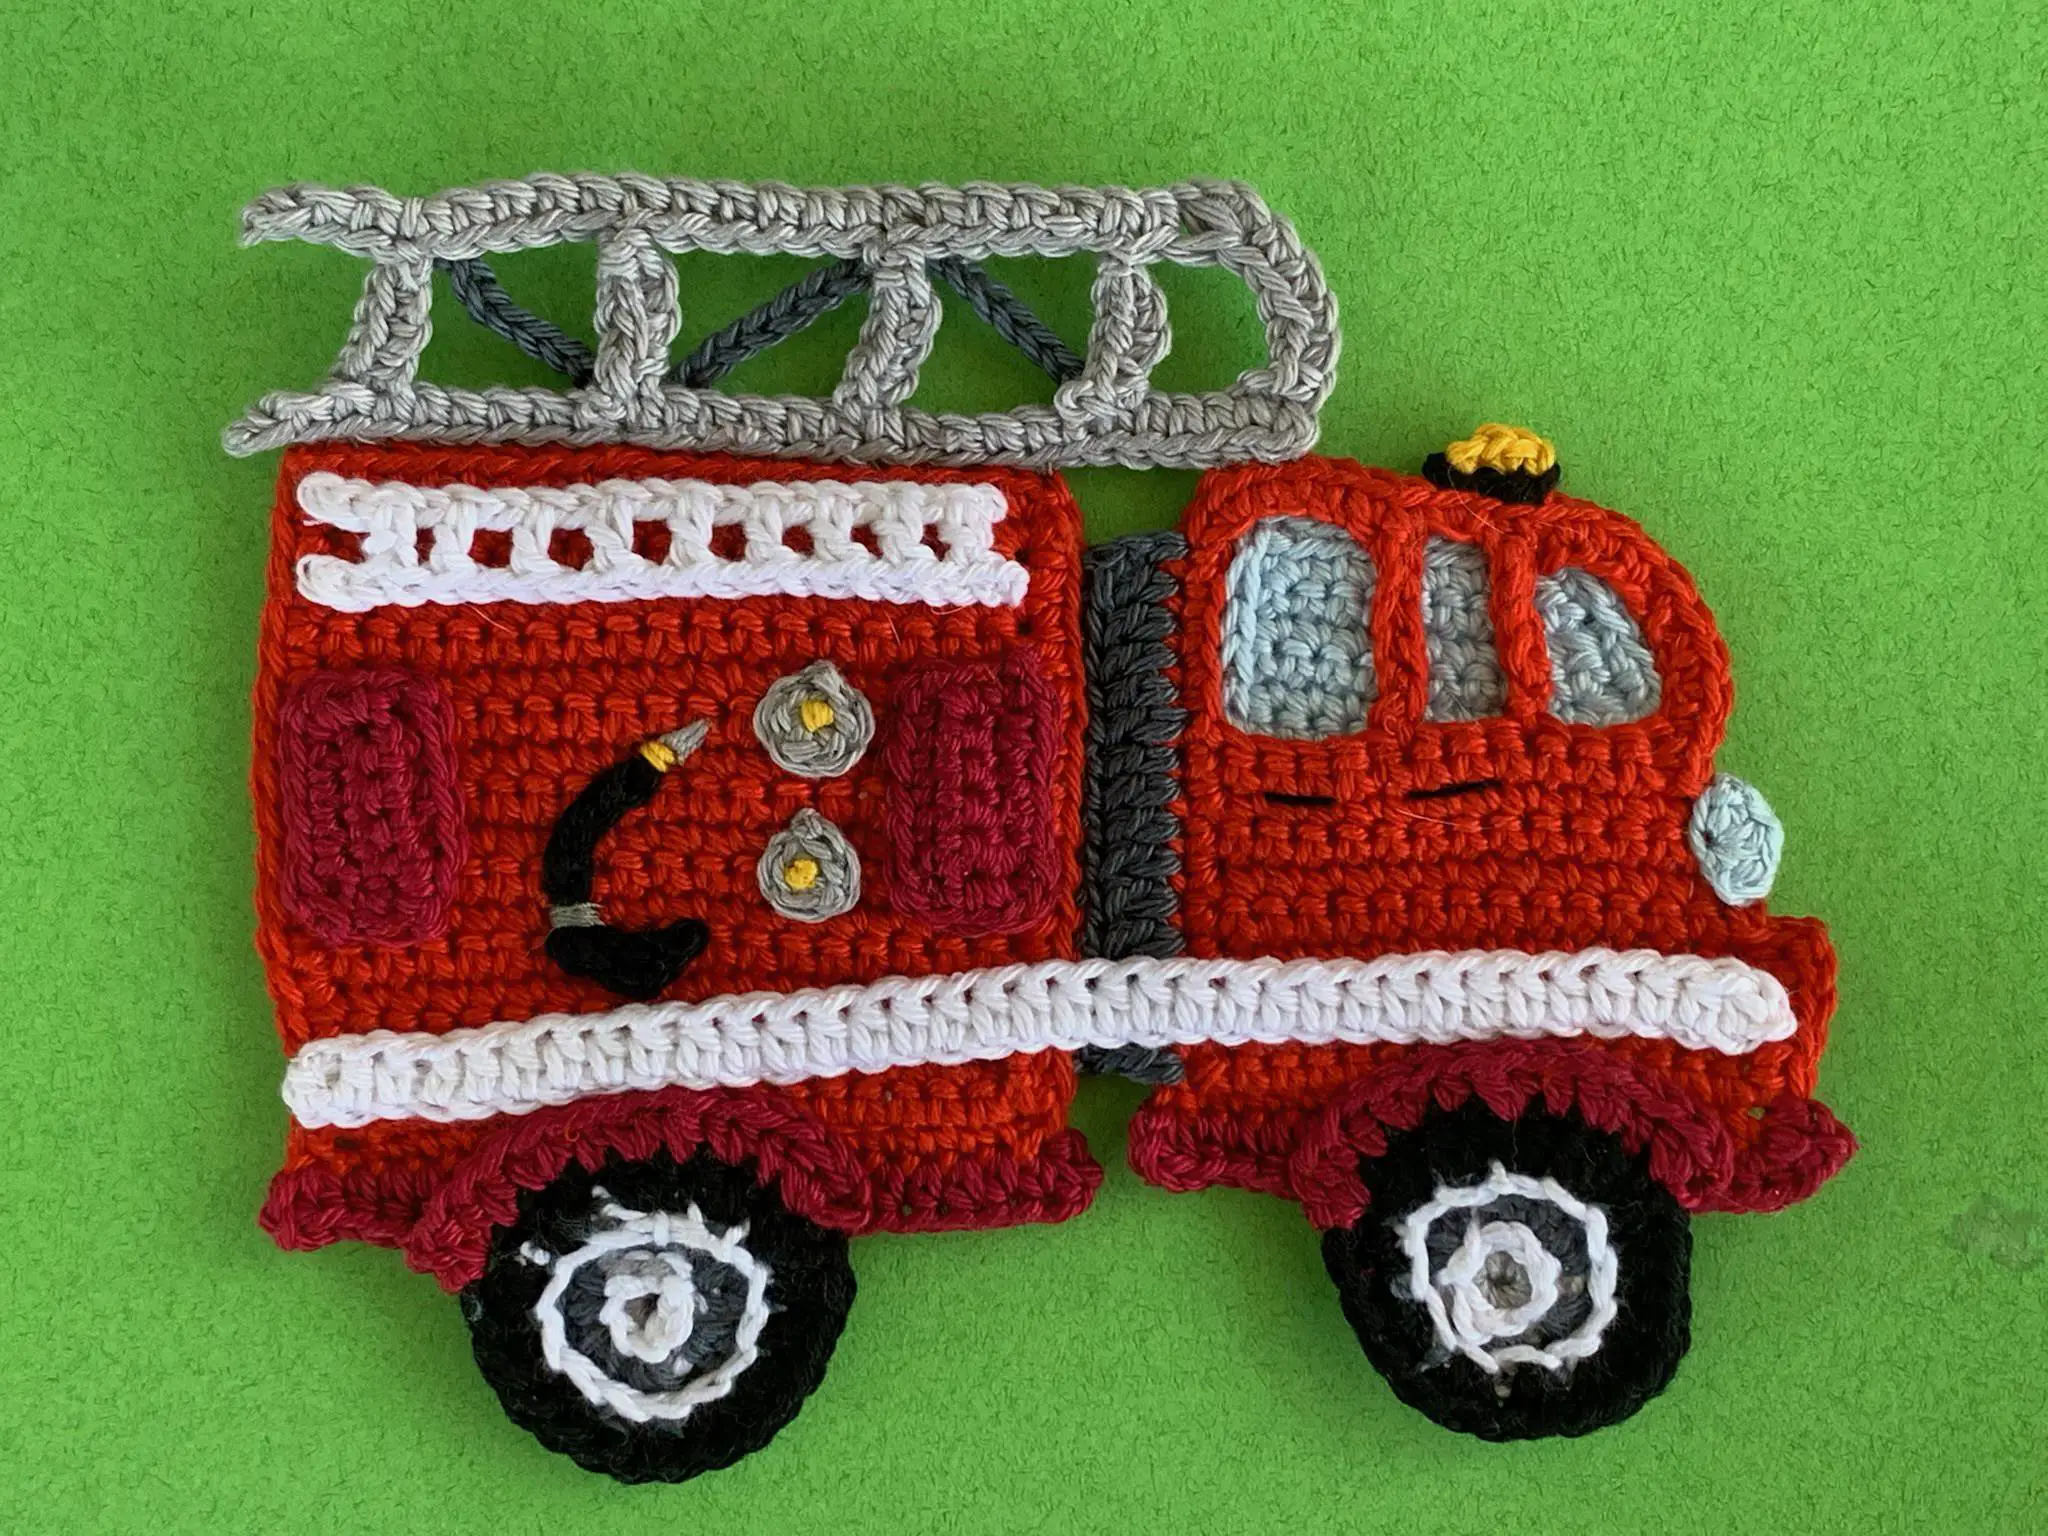 Finished crochet fire engine 4 ply landscape